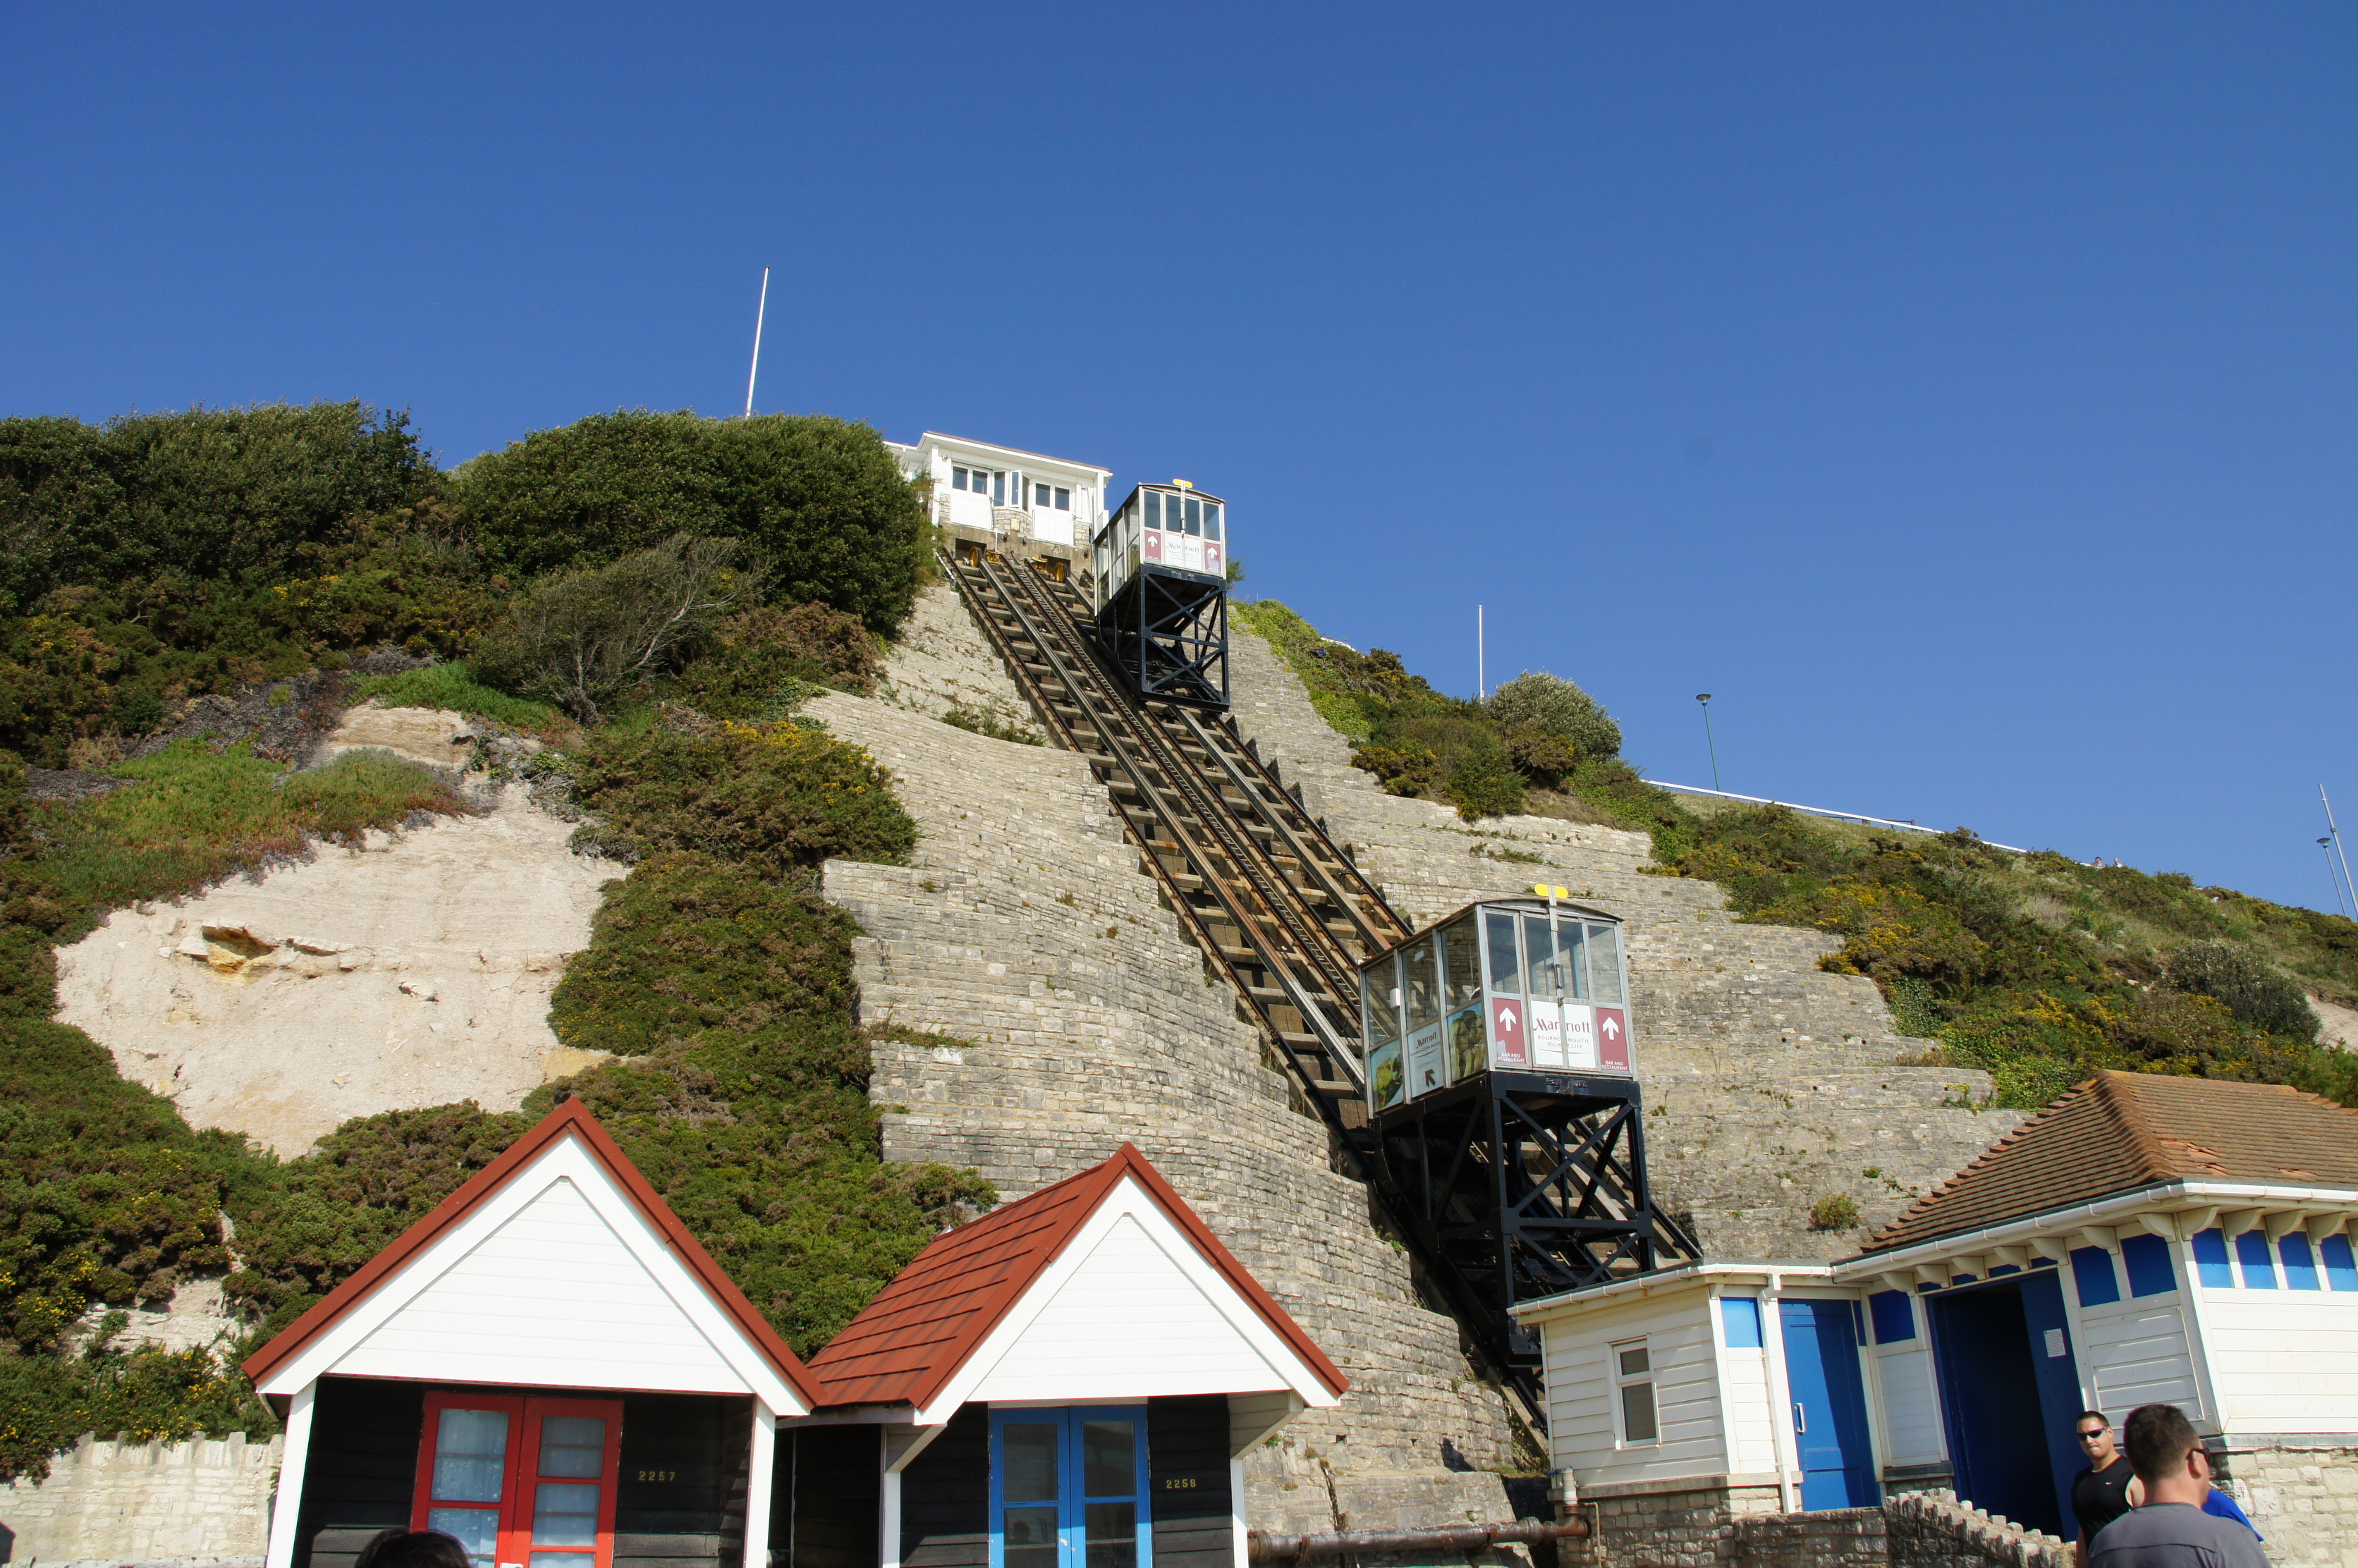 West Cliff Lift, Bournemouth, Dorset